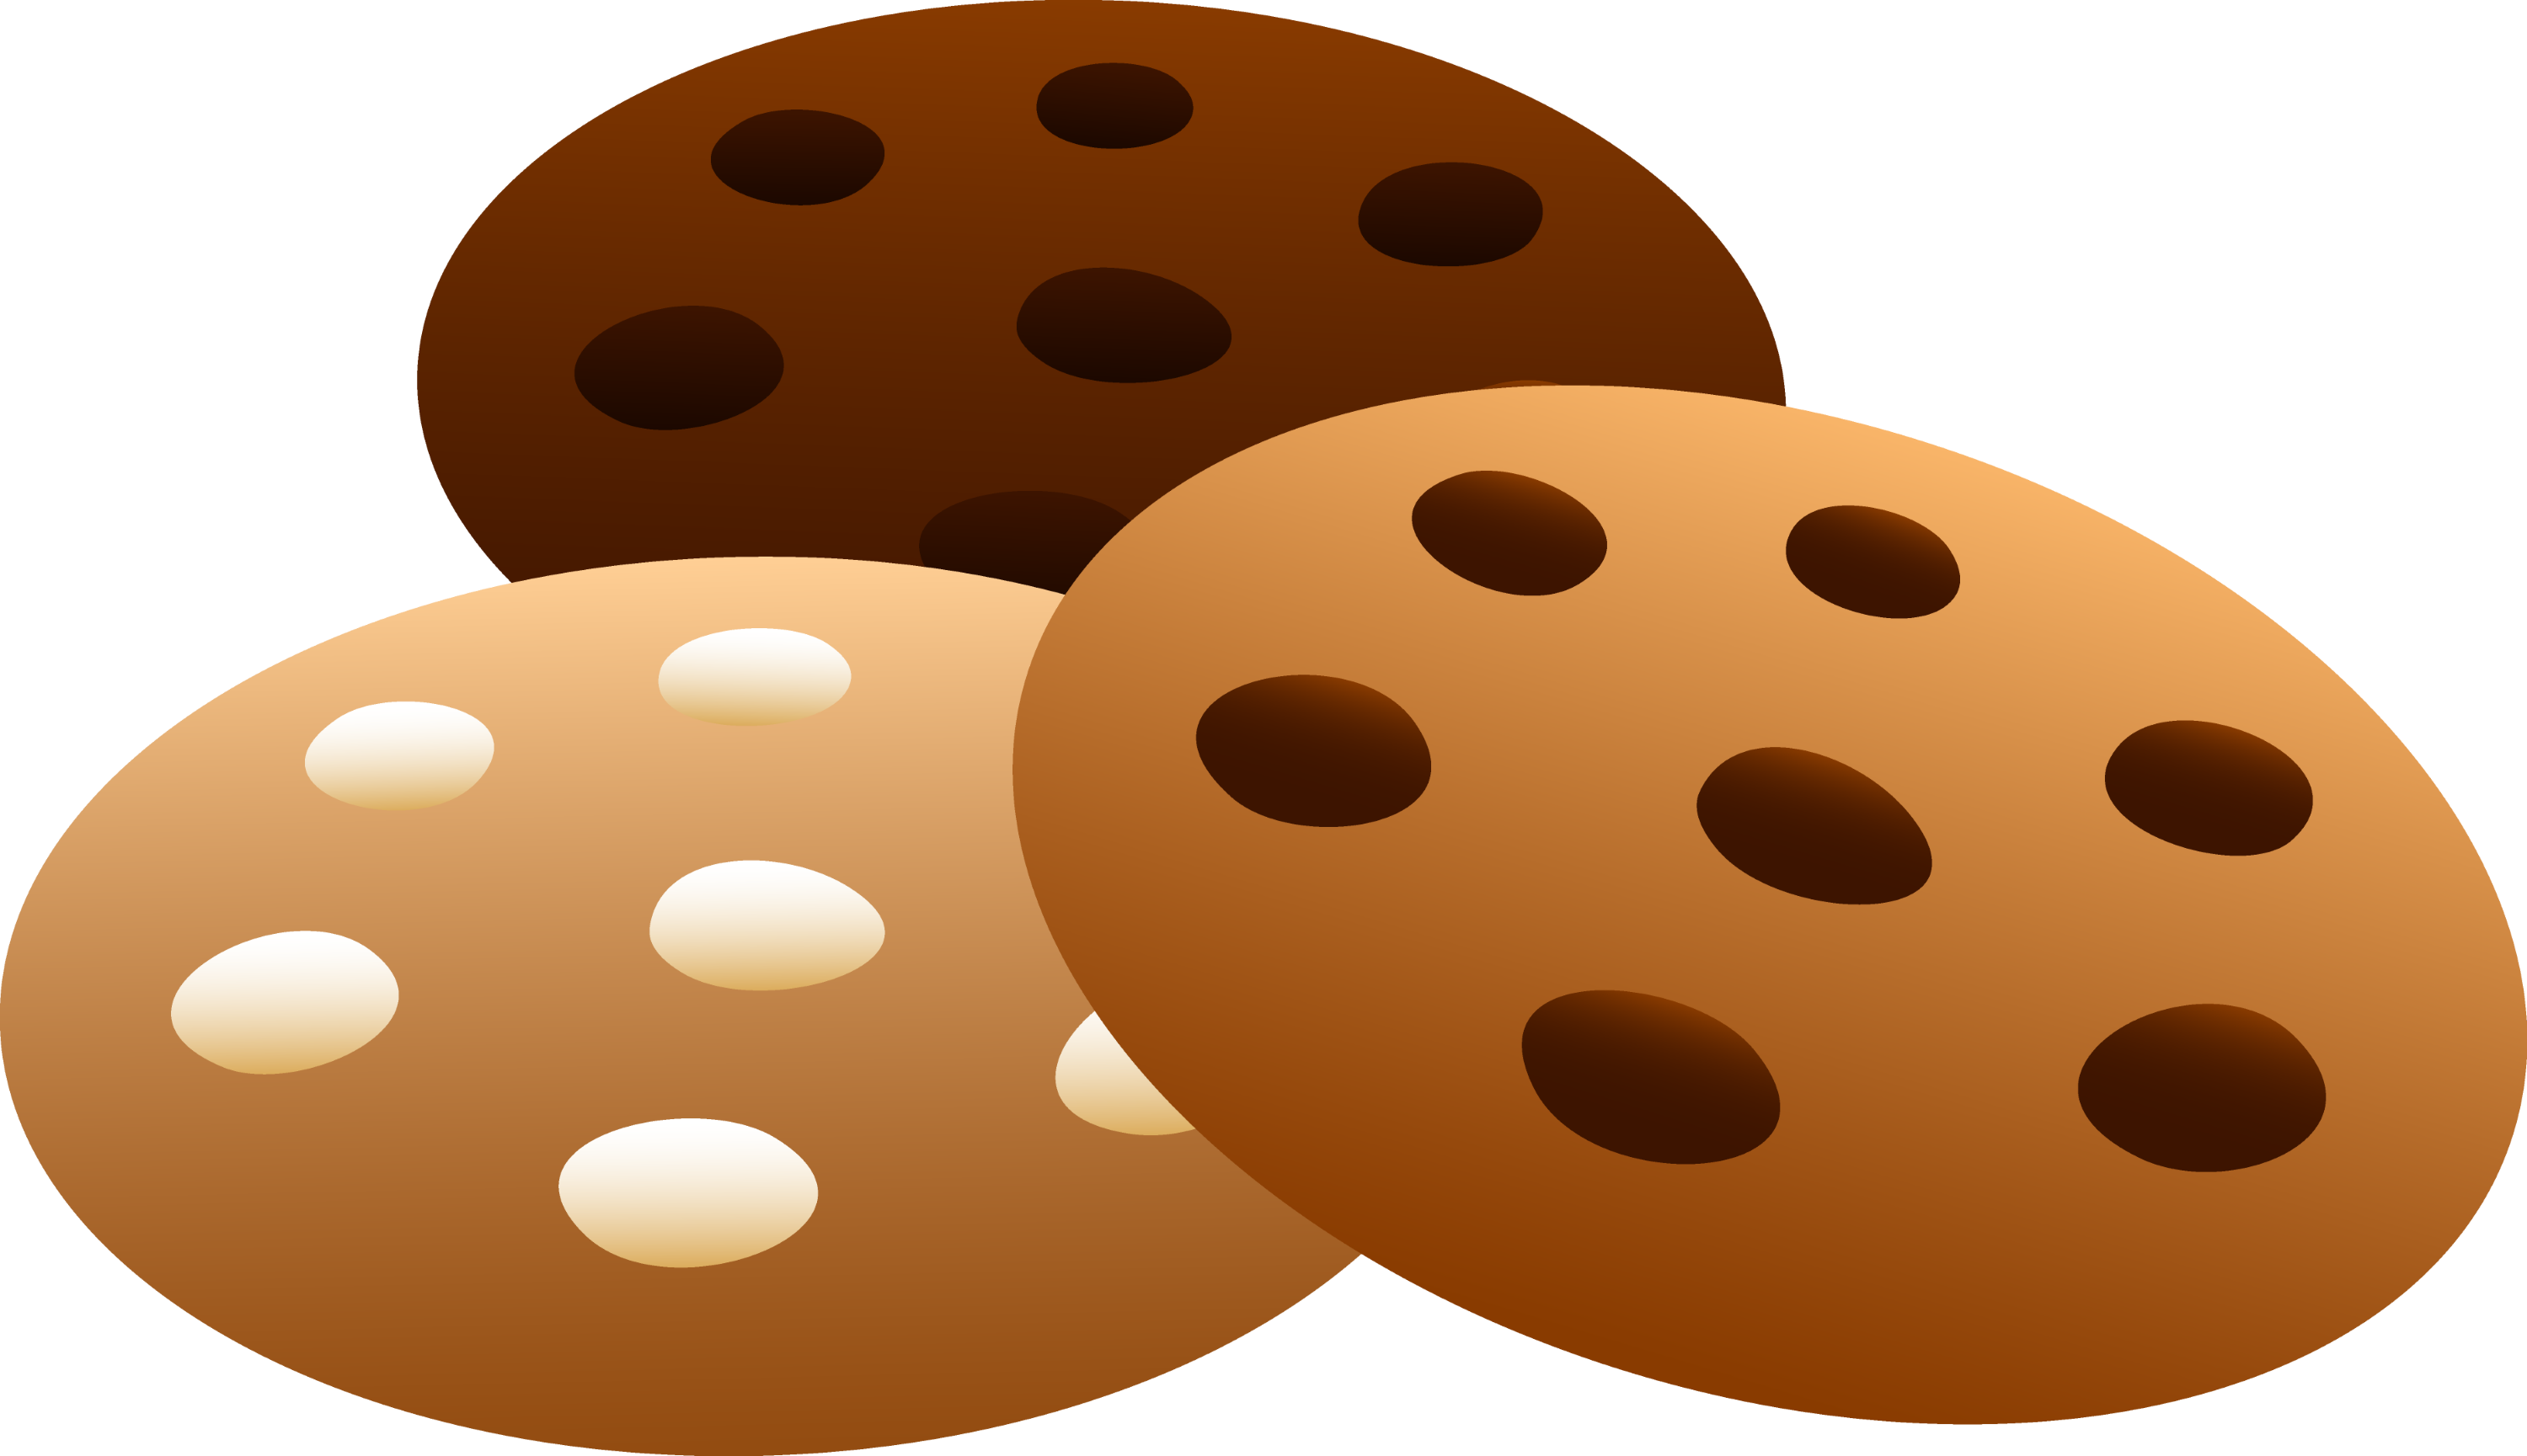 Three Flavors of Cookies - Free Clip Art